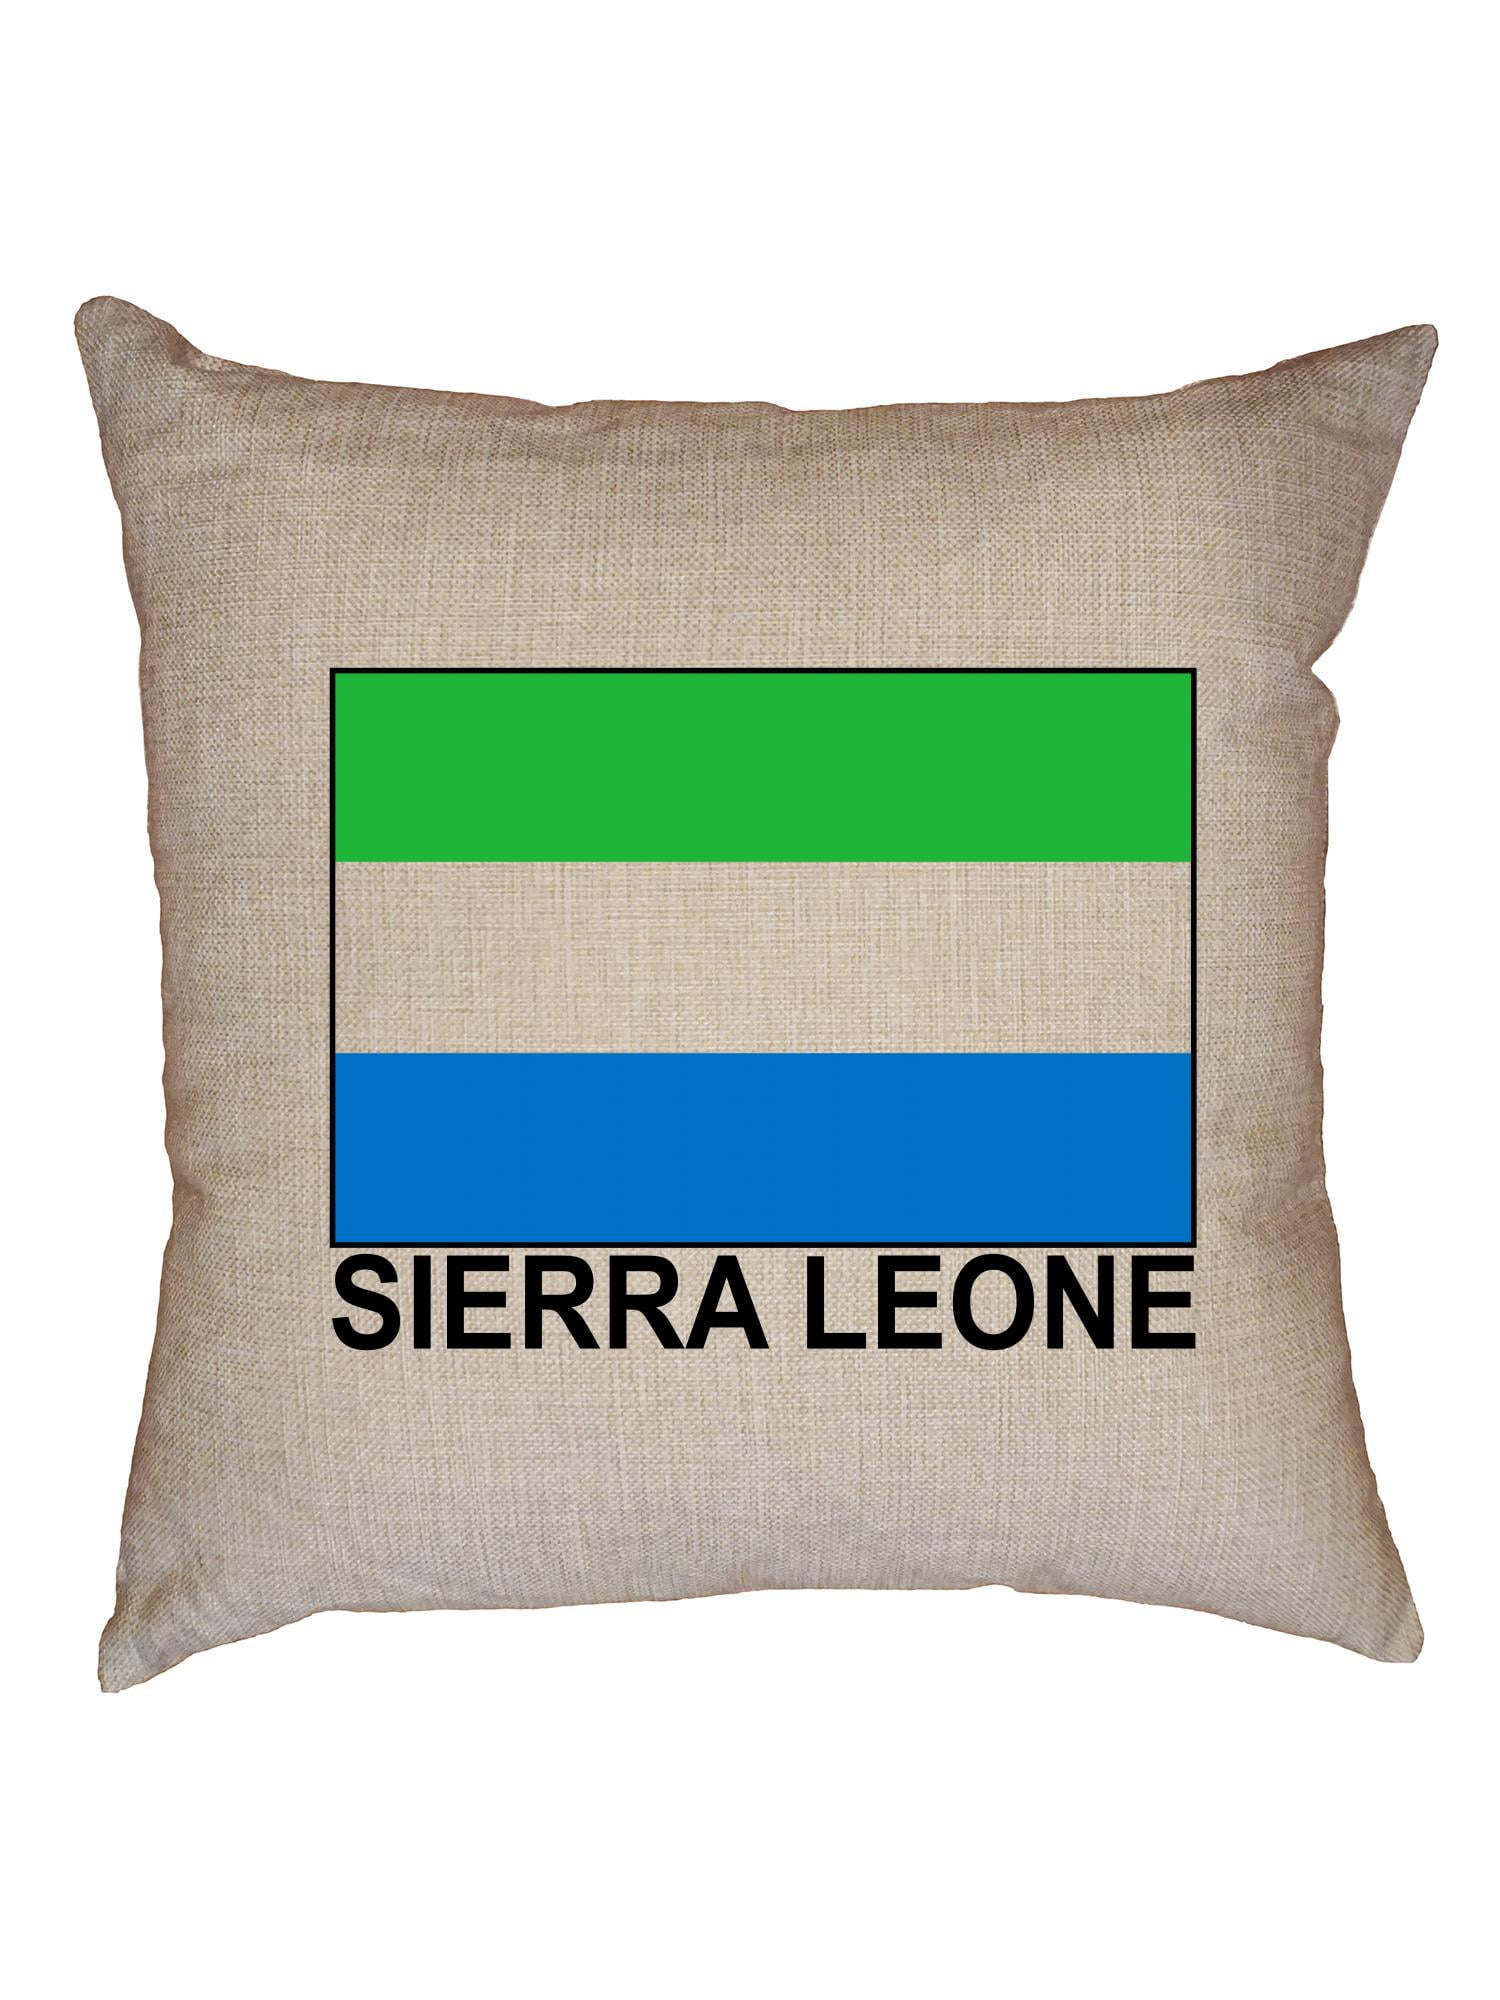 Handmade Sierra Linen Look Like Cushion Cover Pillow Case Home Sofa Bed Decor